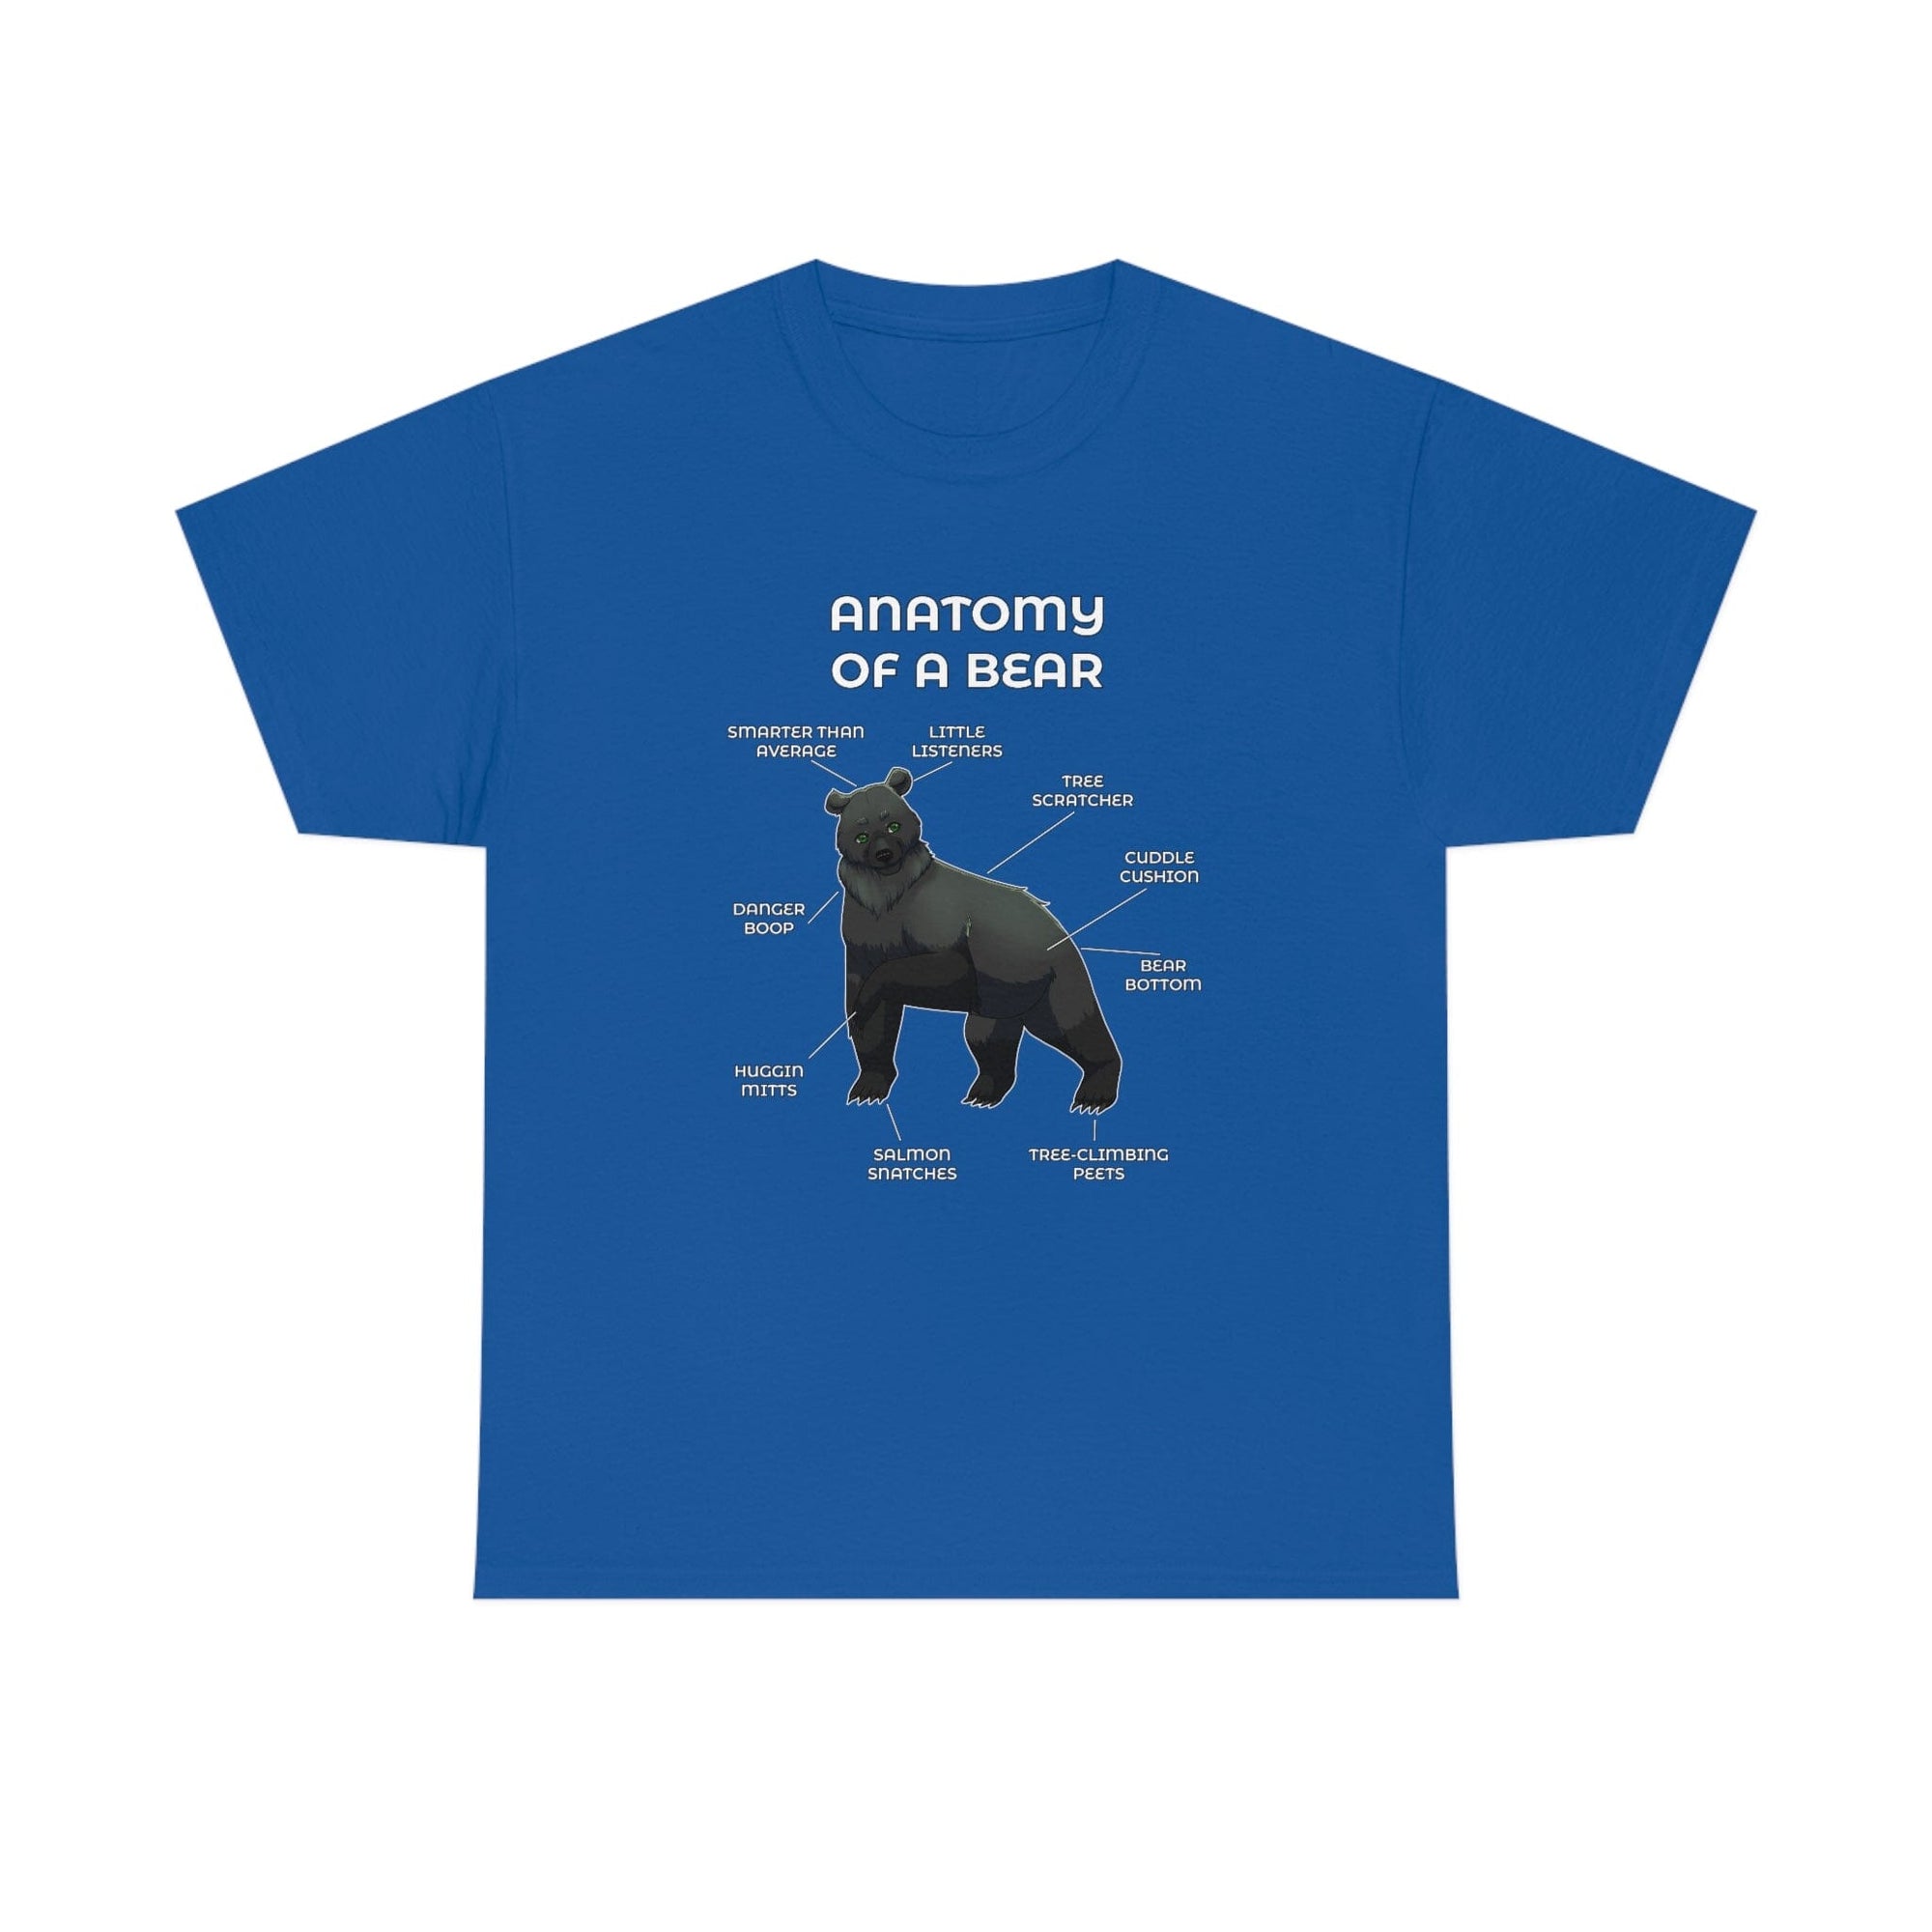 Bear Black - T-Shirt T-Shirt Artworktee Royal Blue S 